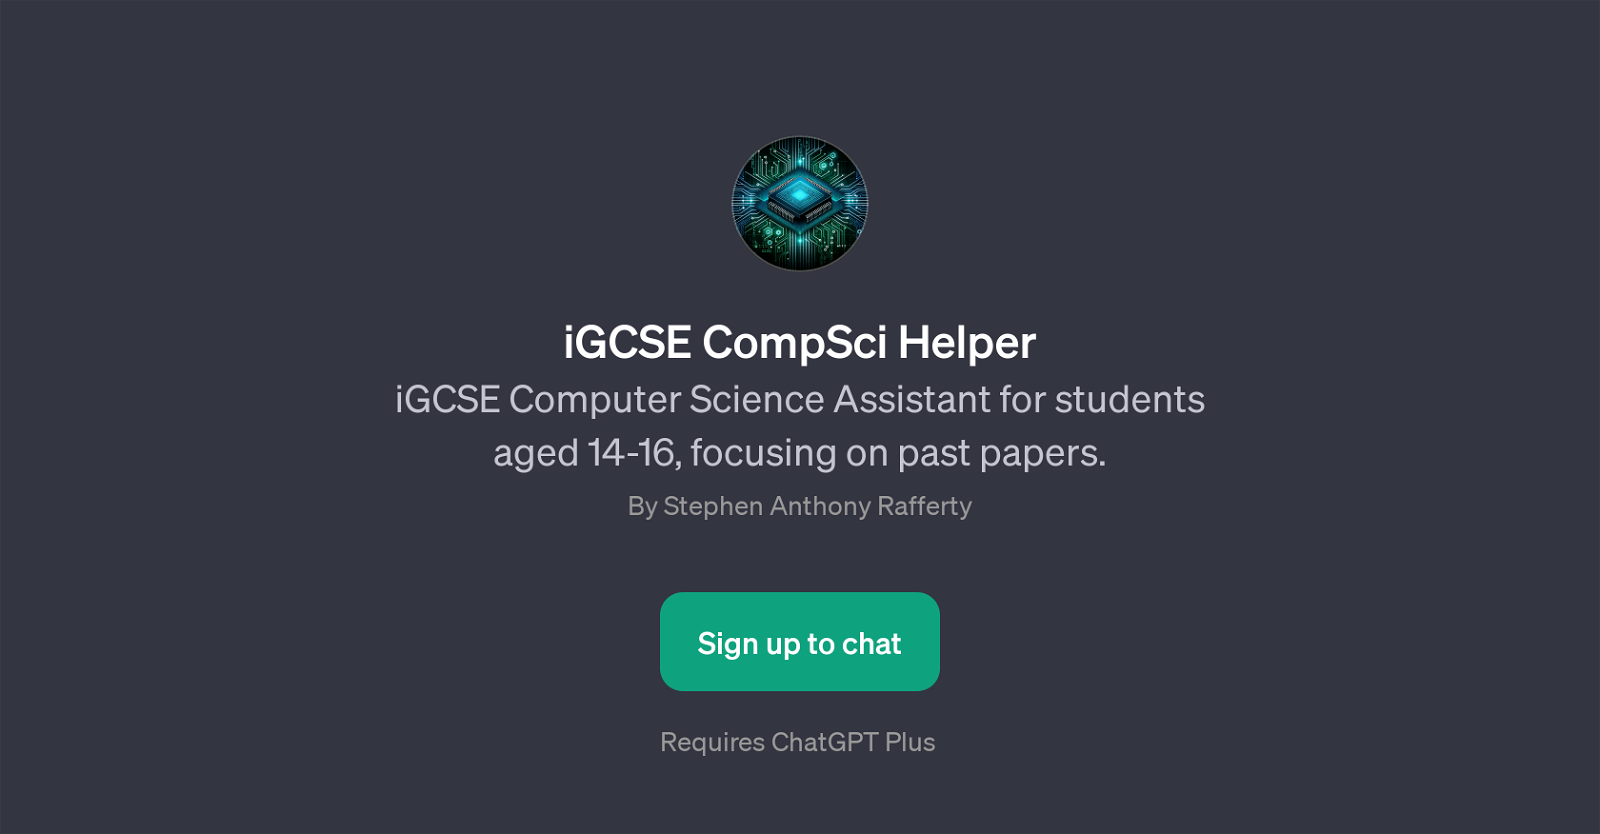 iGCSE CompSci Helper website